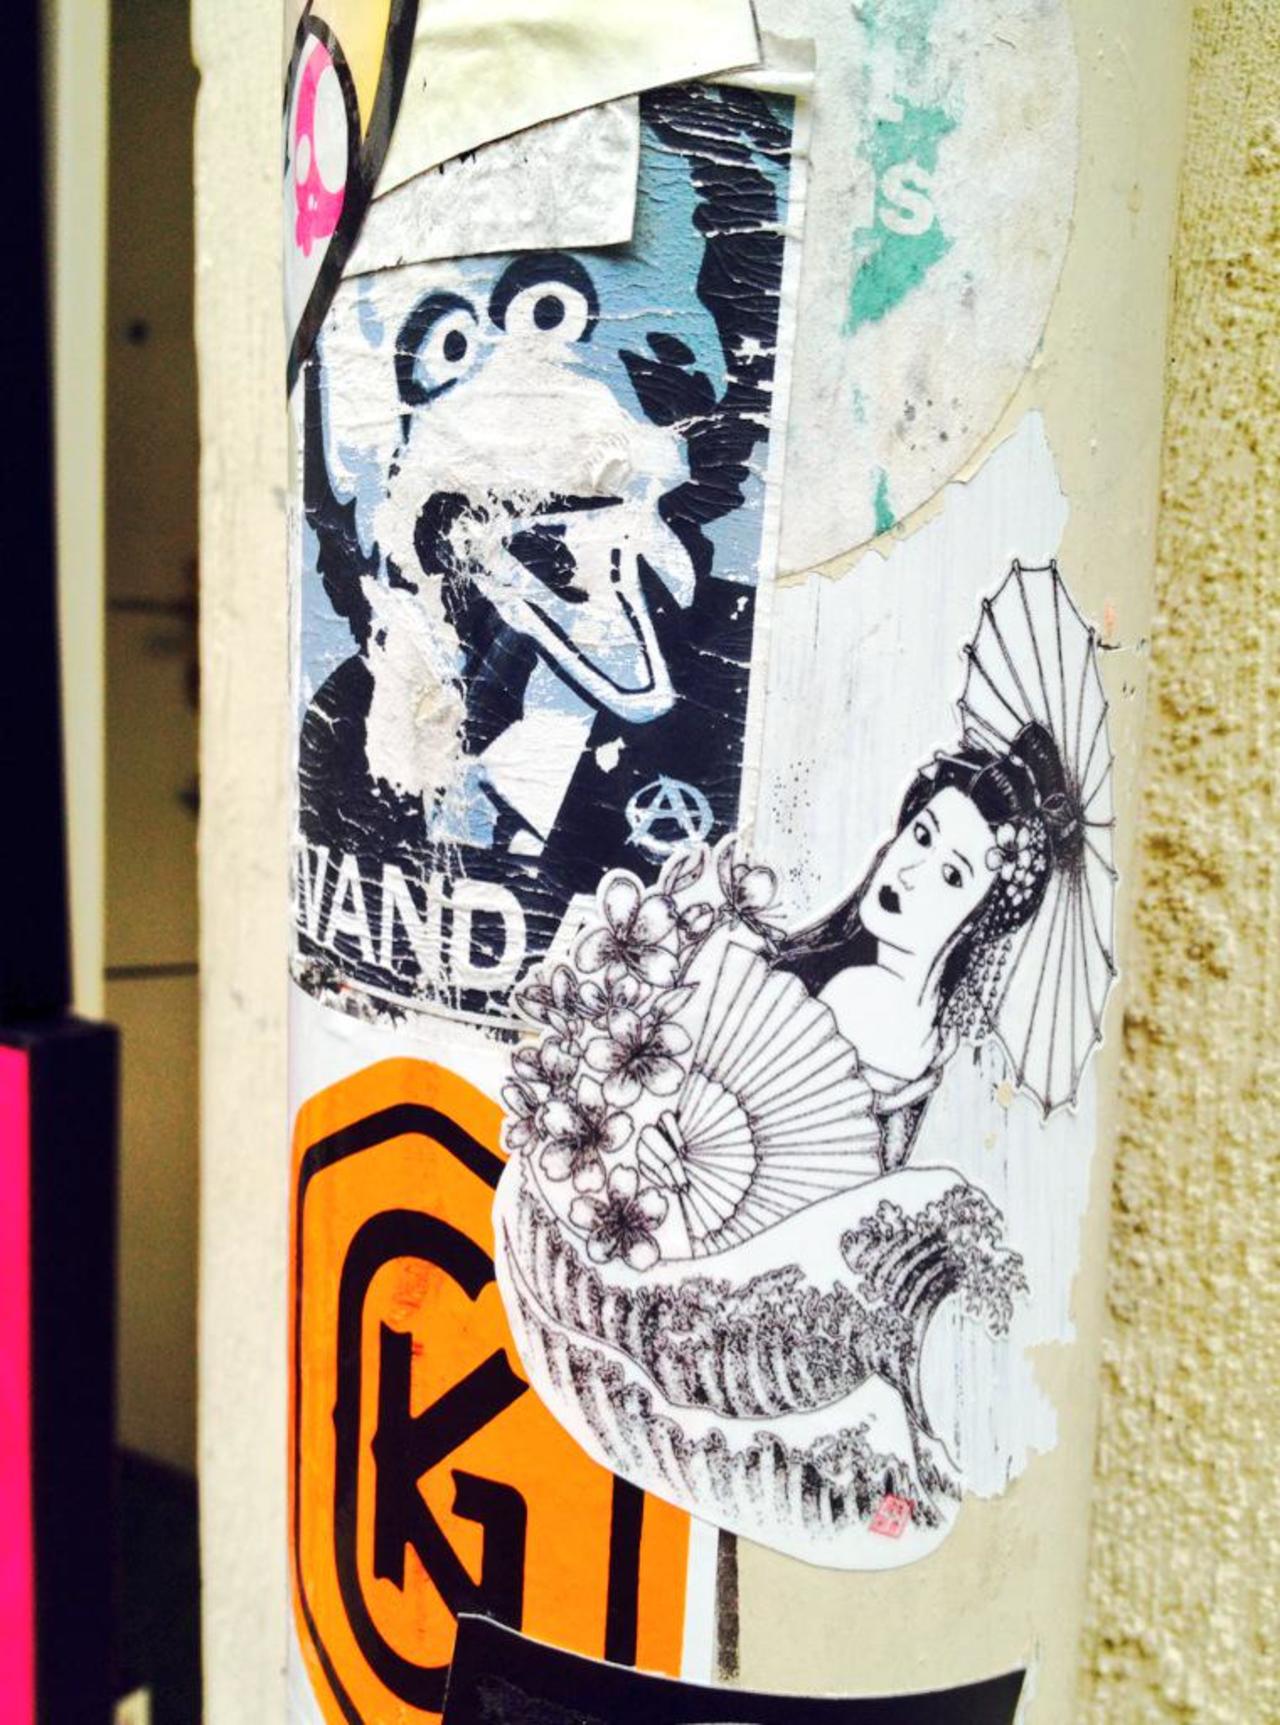 Sesame Street & Umbrella geisha
#streetart #urbanart #graffiti #sticker #stickerart #bigbird #ArtistoftheDay #art http://t.co/42quGjFUs5